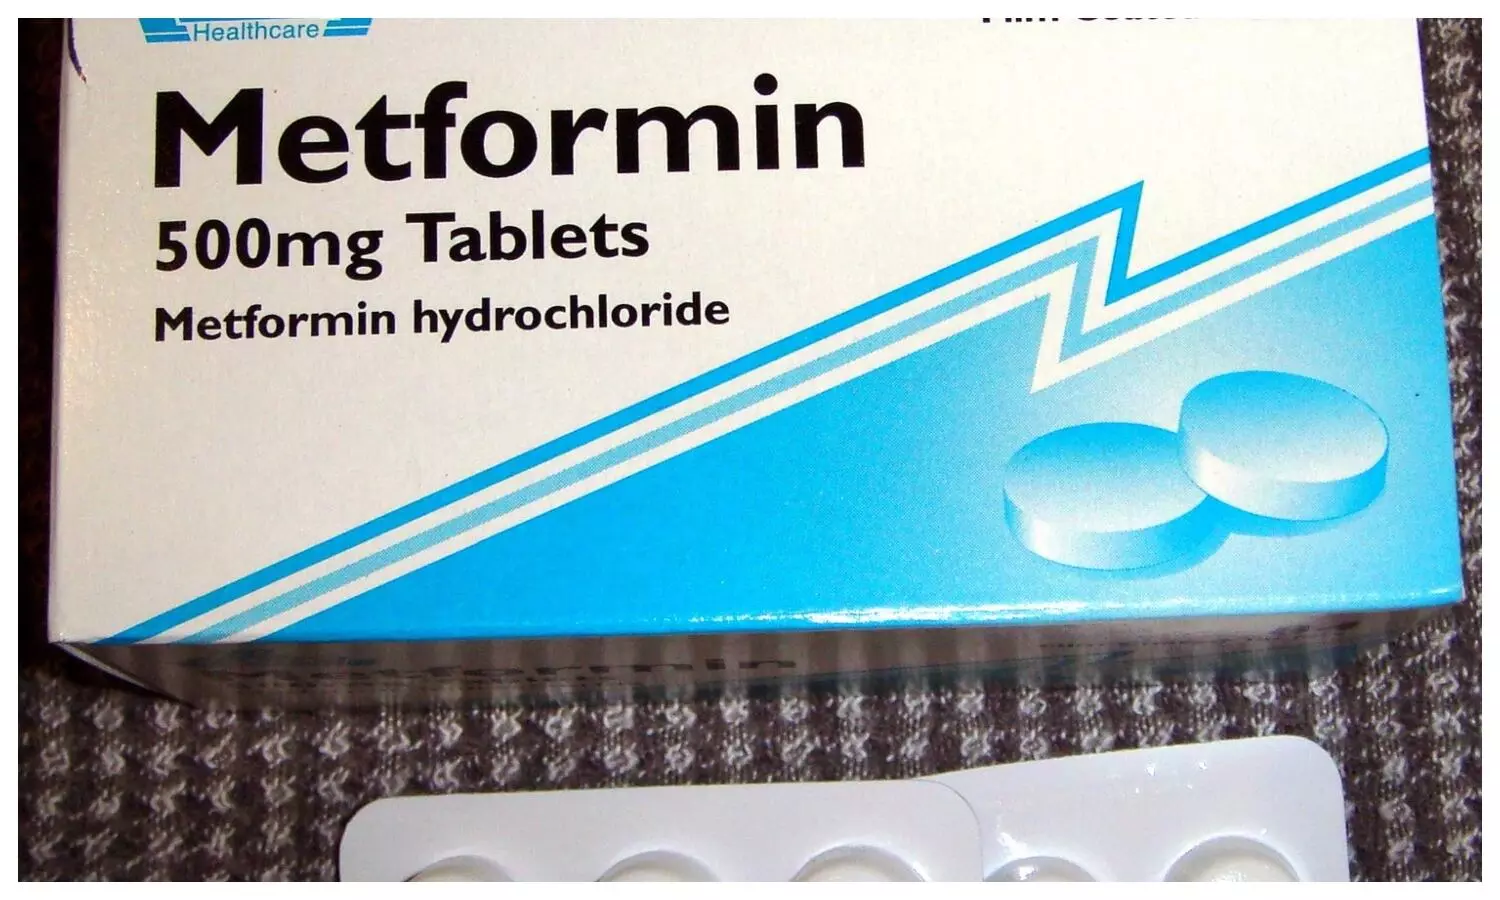 Metformin increases B12 in diabetes patients